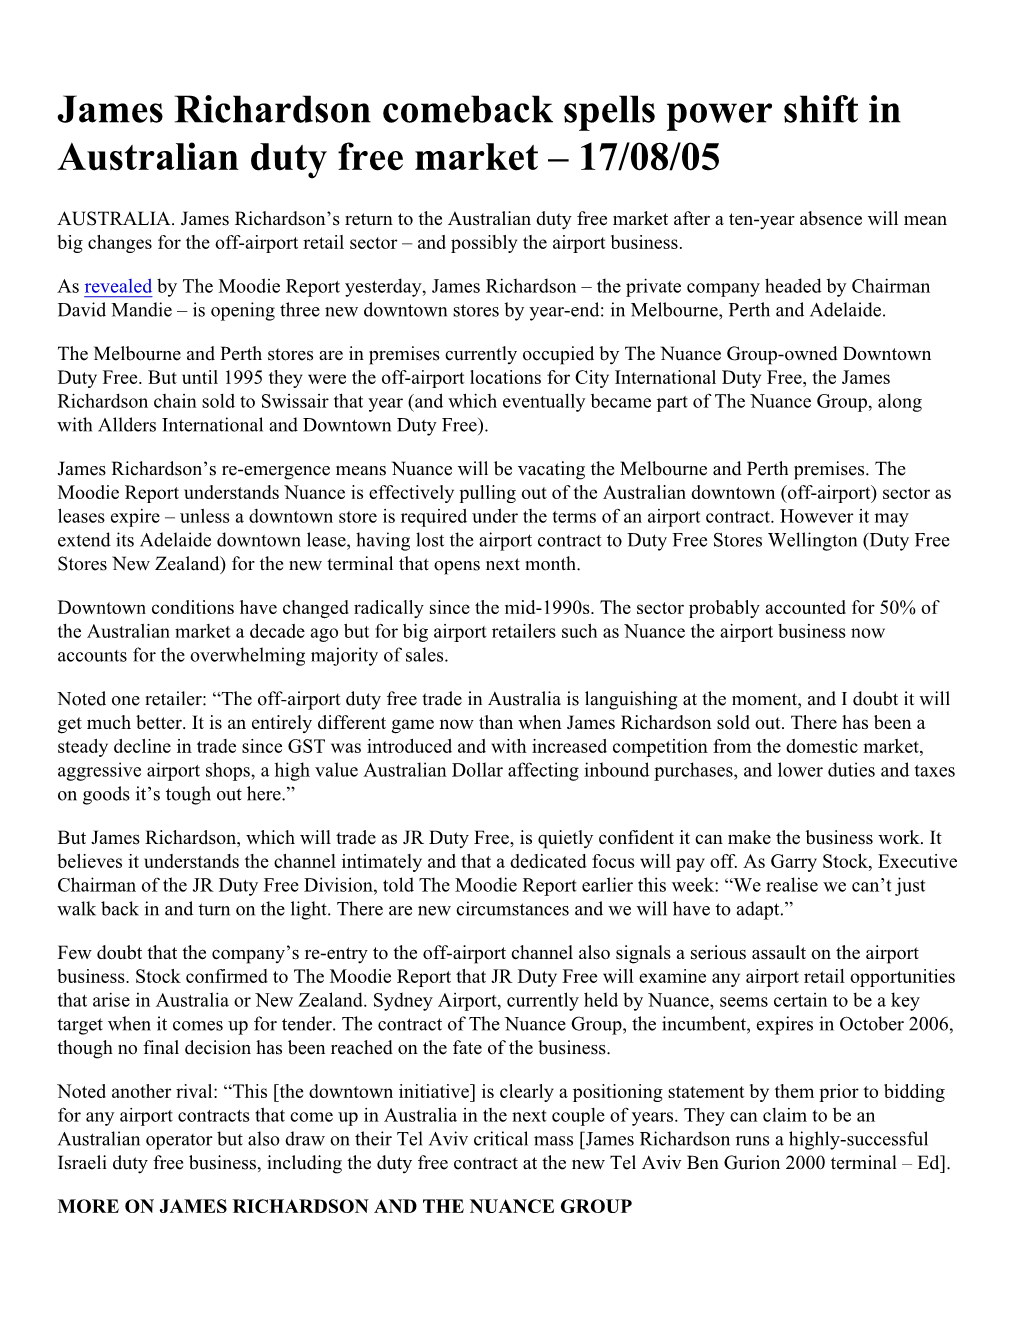 James Richardson Comeback Spells Power Shift in Australian Duty Free Market – 17/08/05